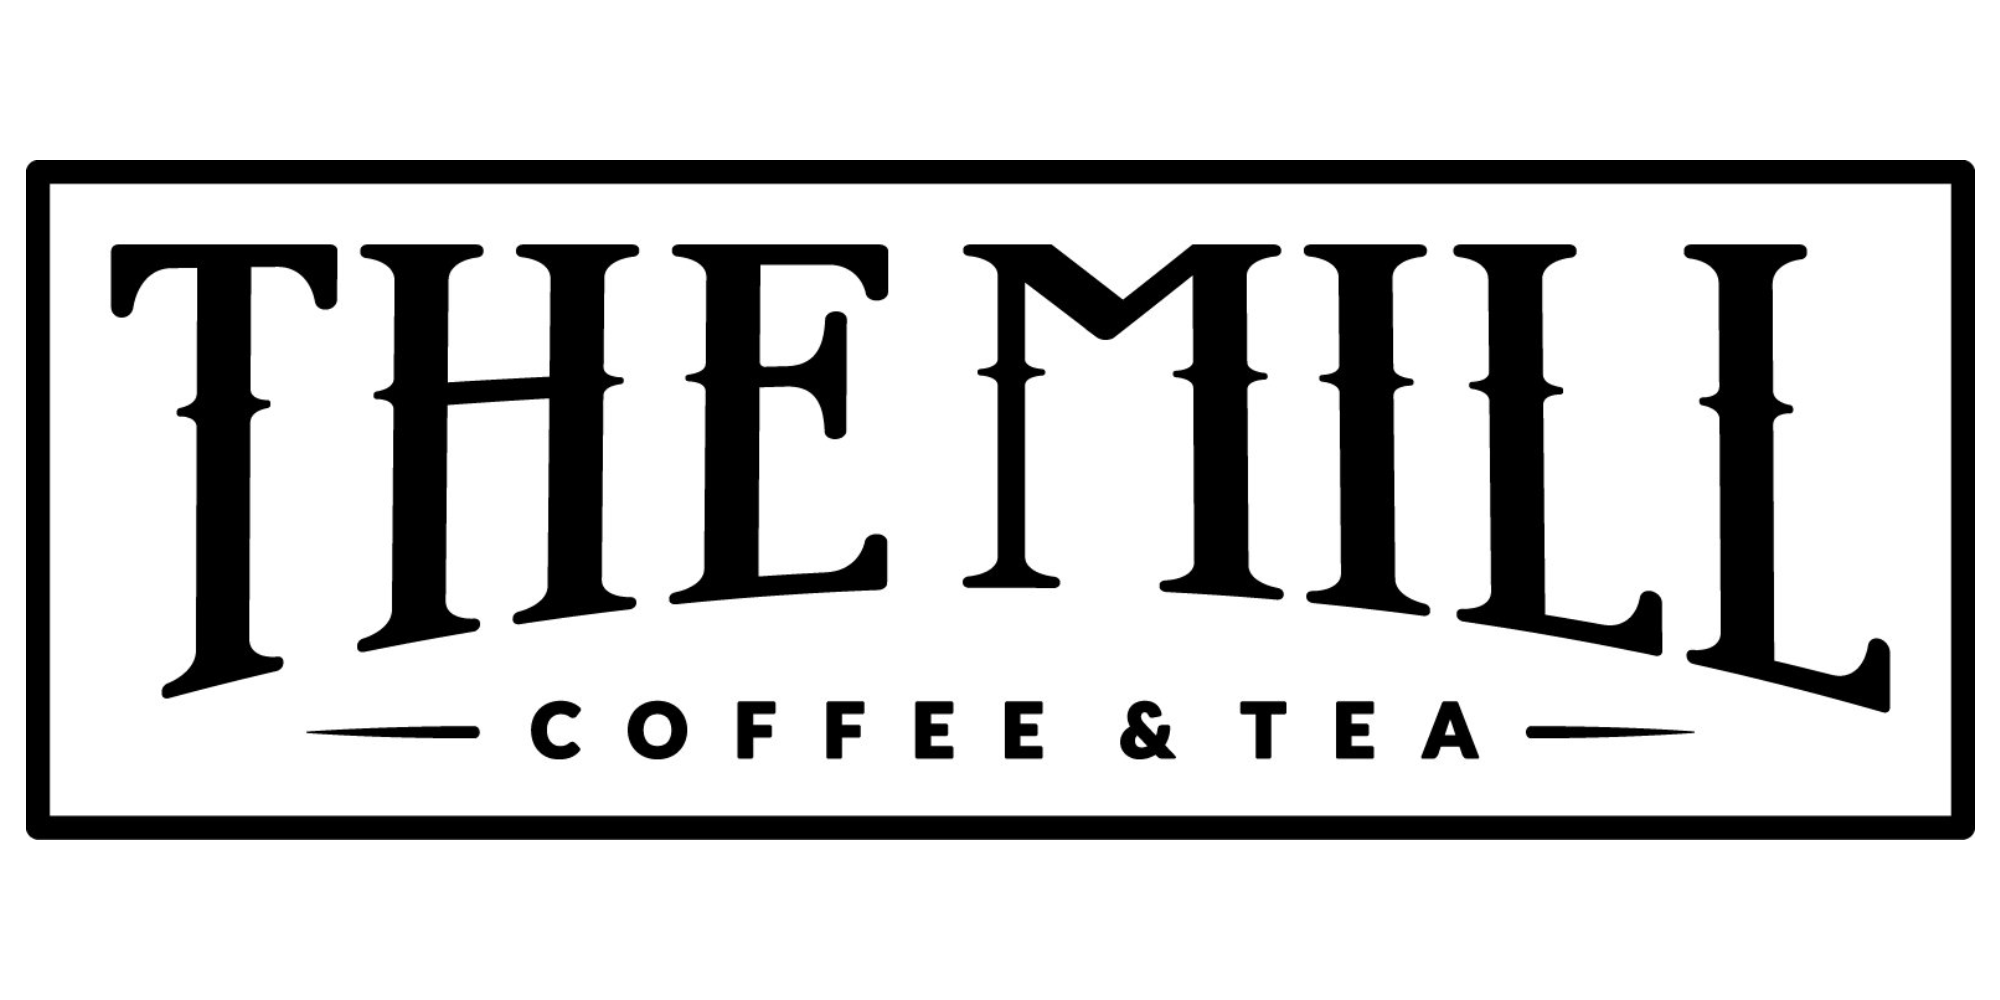 The Mill Coffee & Tea